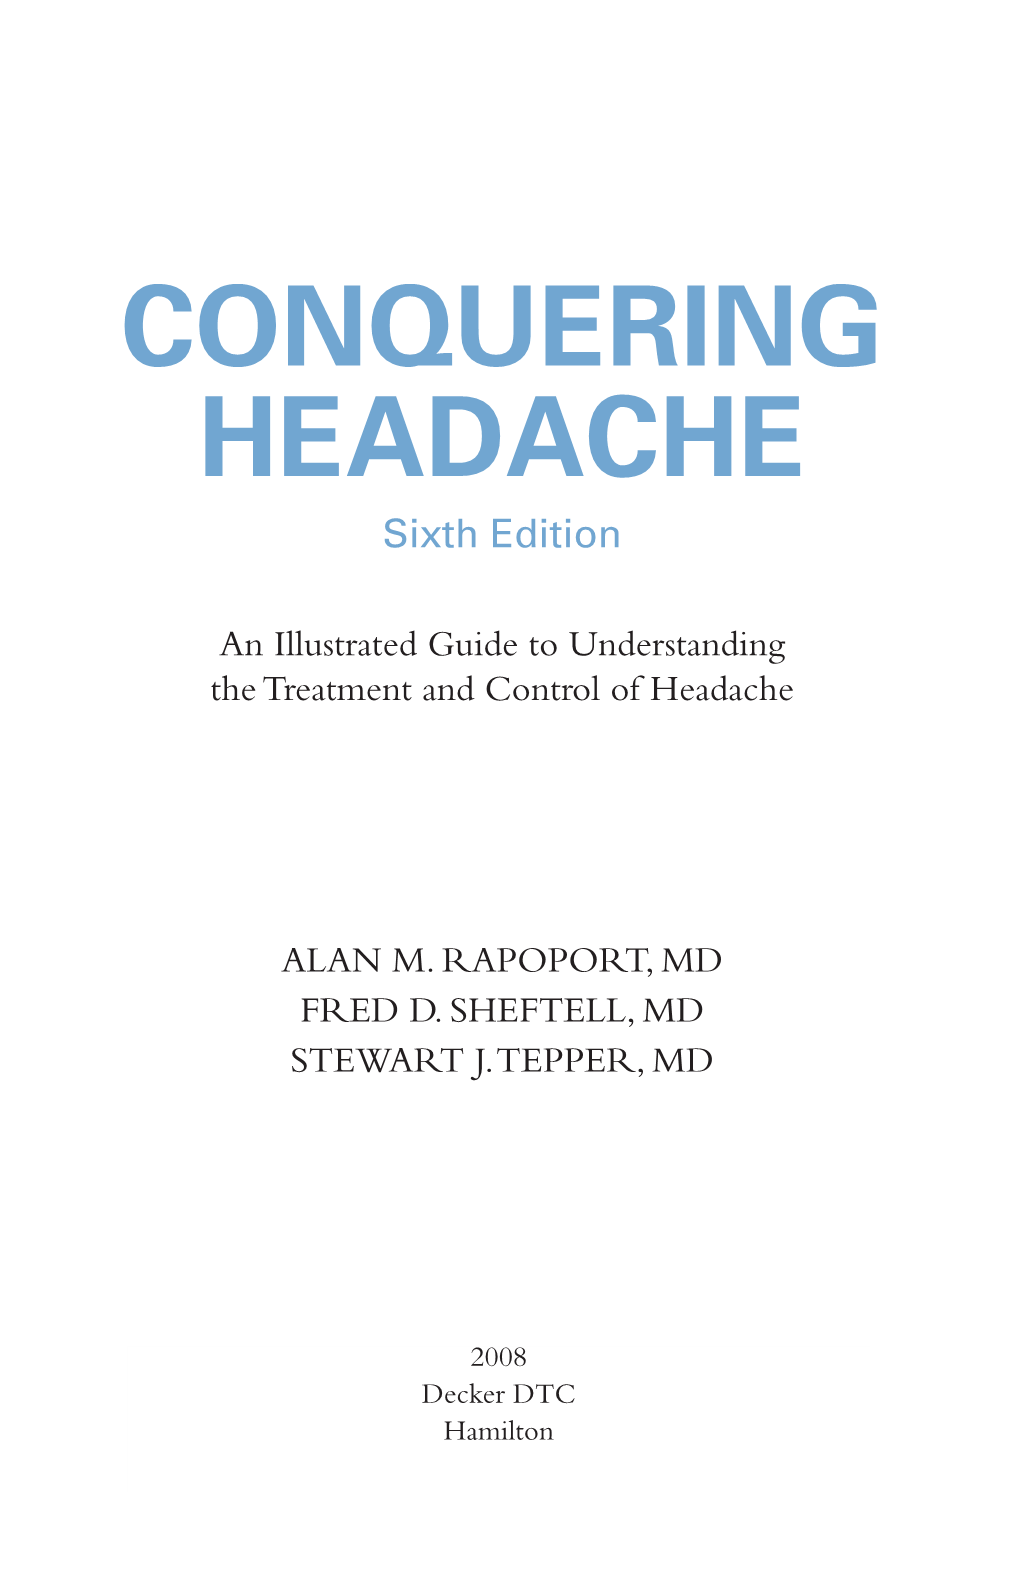 CONQUERING HEADACHE Sixth Edition